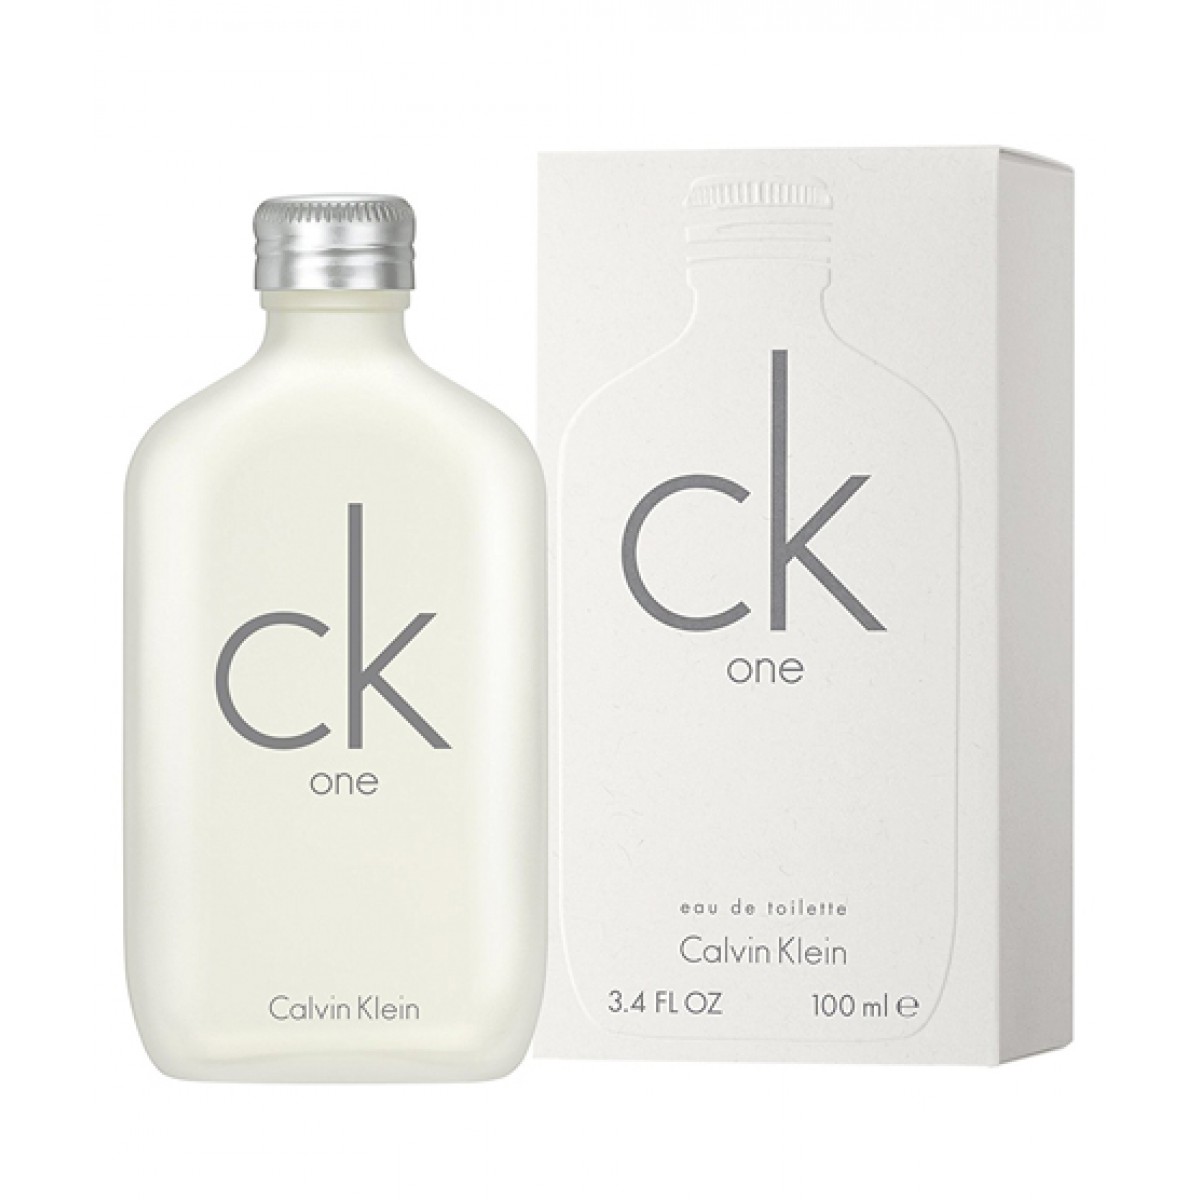 CK One perfume